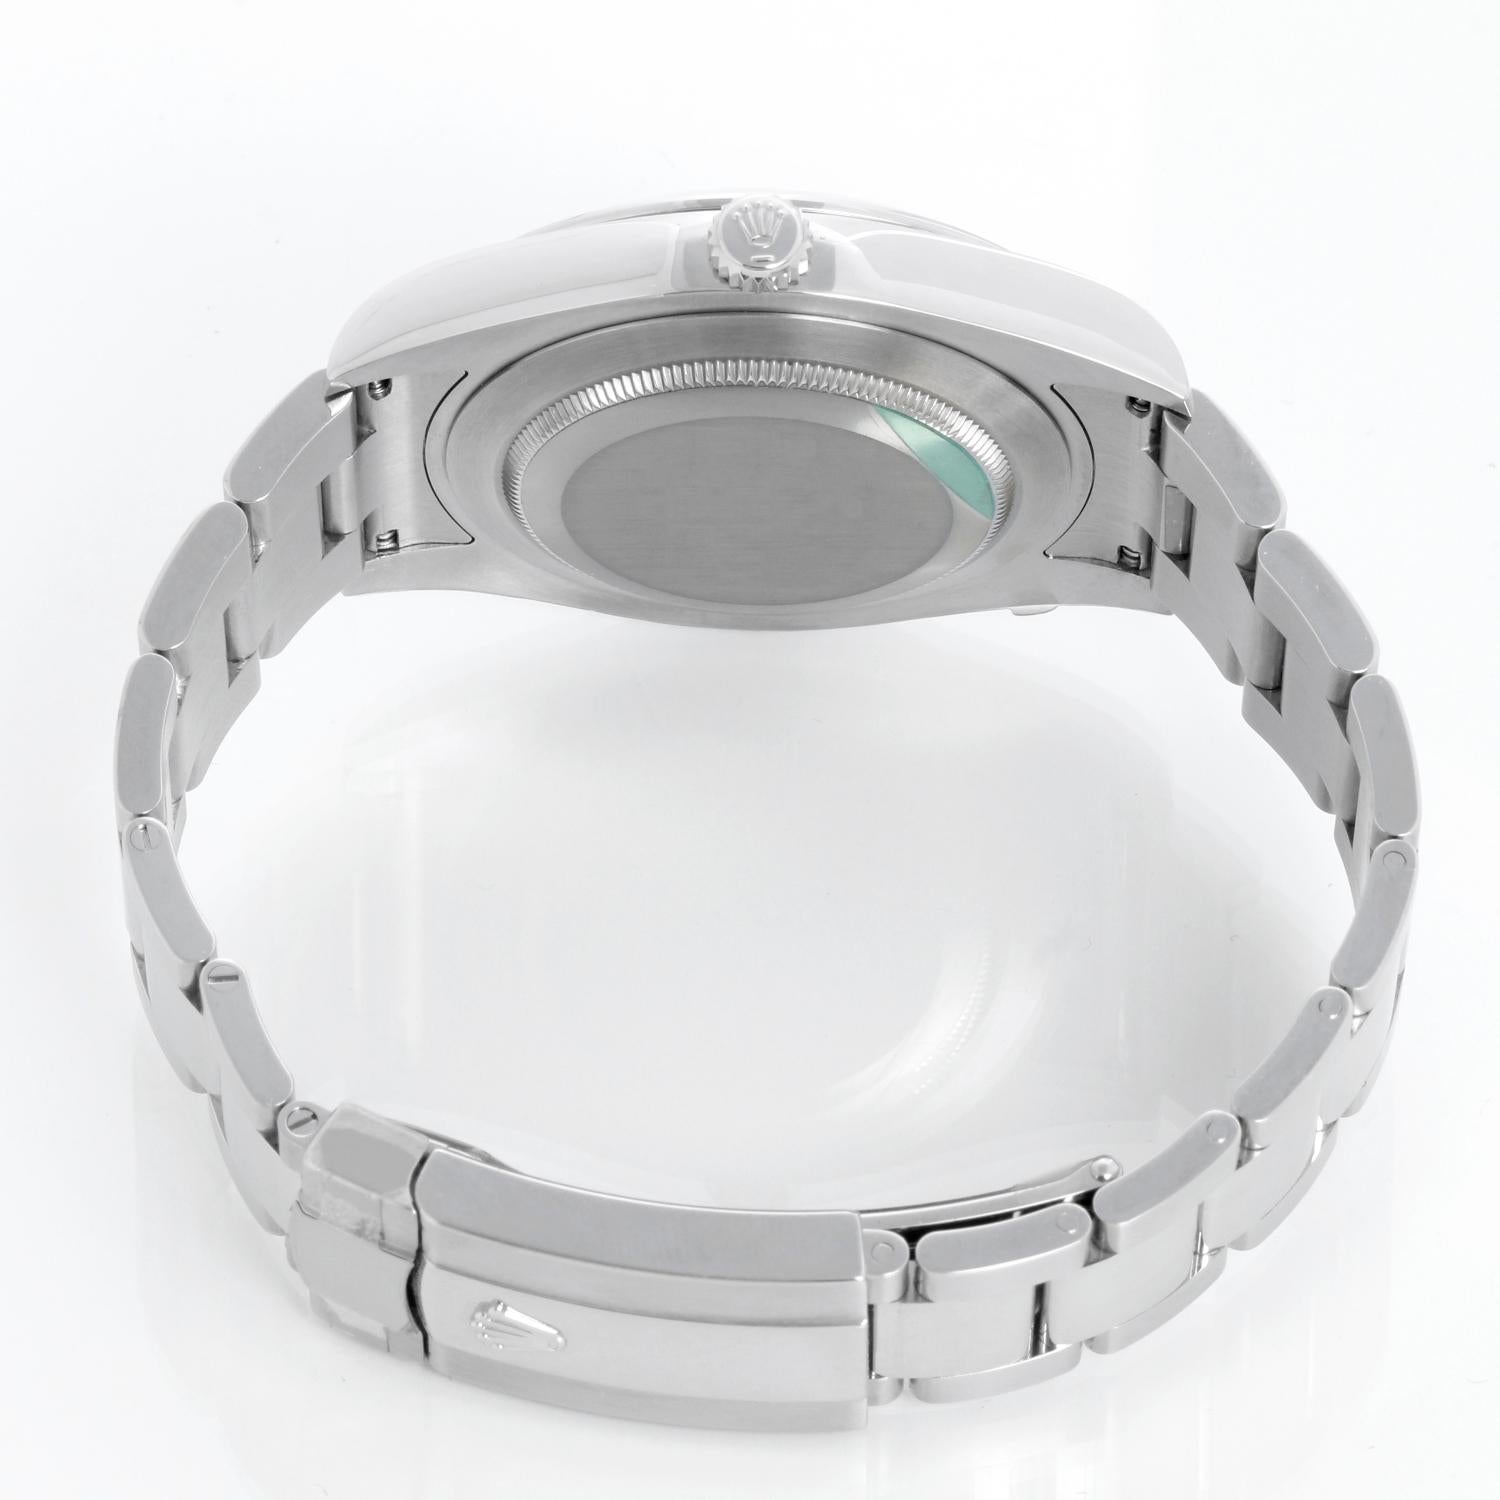 Rolex Datejust II Men's 41mm Stainless Steel Watch 116300 For Sale 1